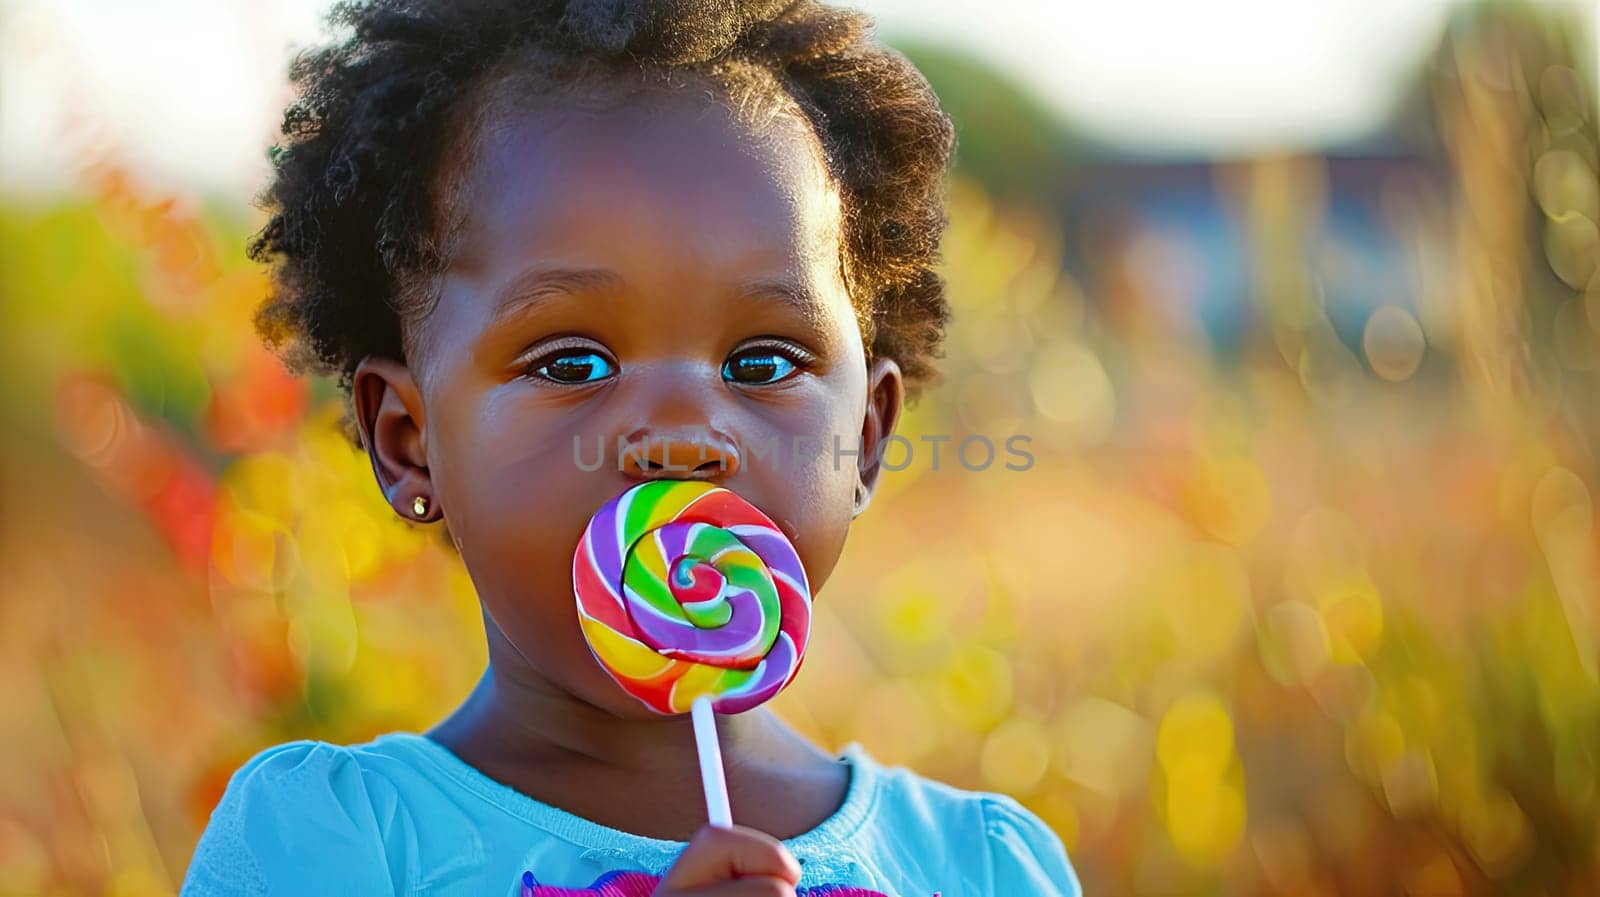 A child eats a lollipop. Selective focus. by yanadjana